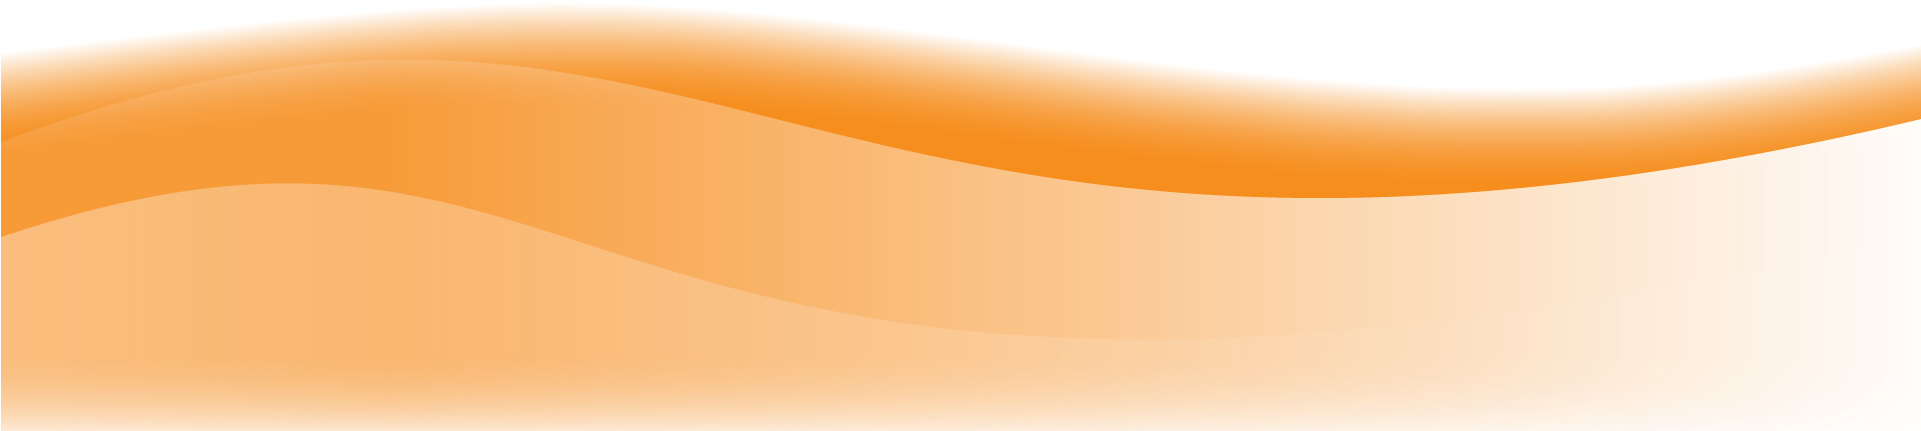 Vektor oranye gelombang PNG gambar Transparan